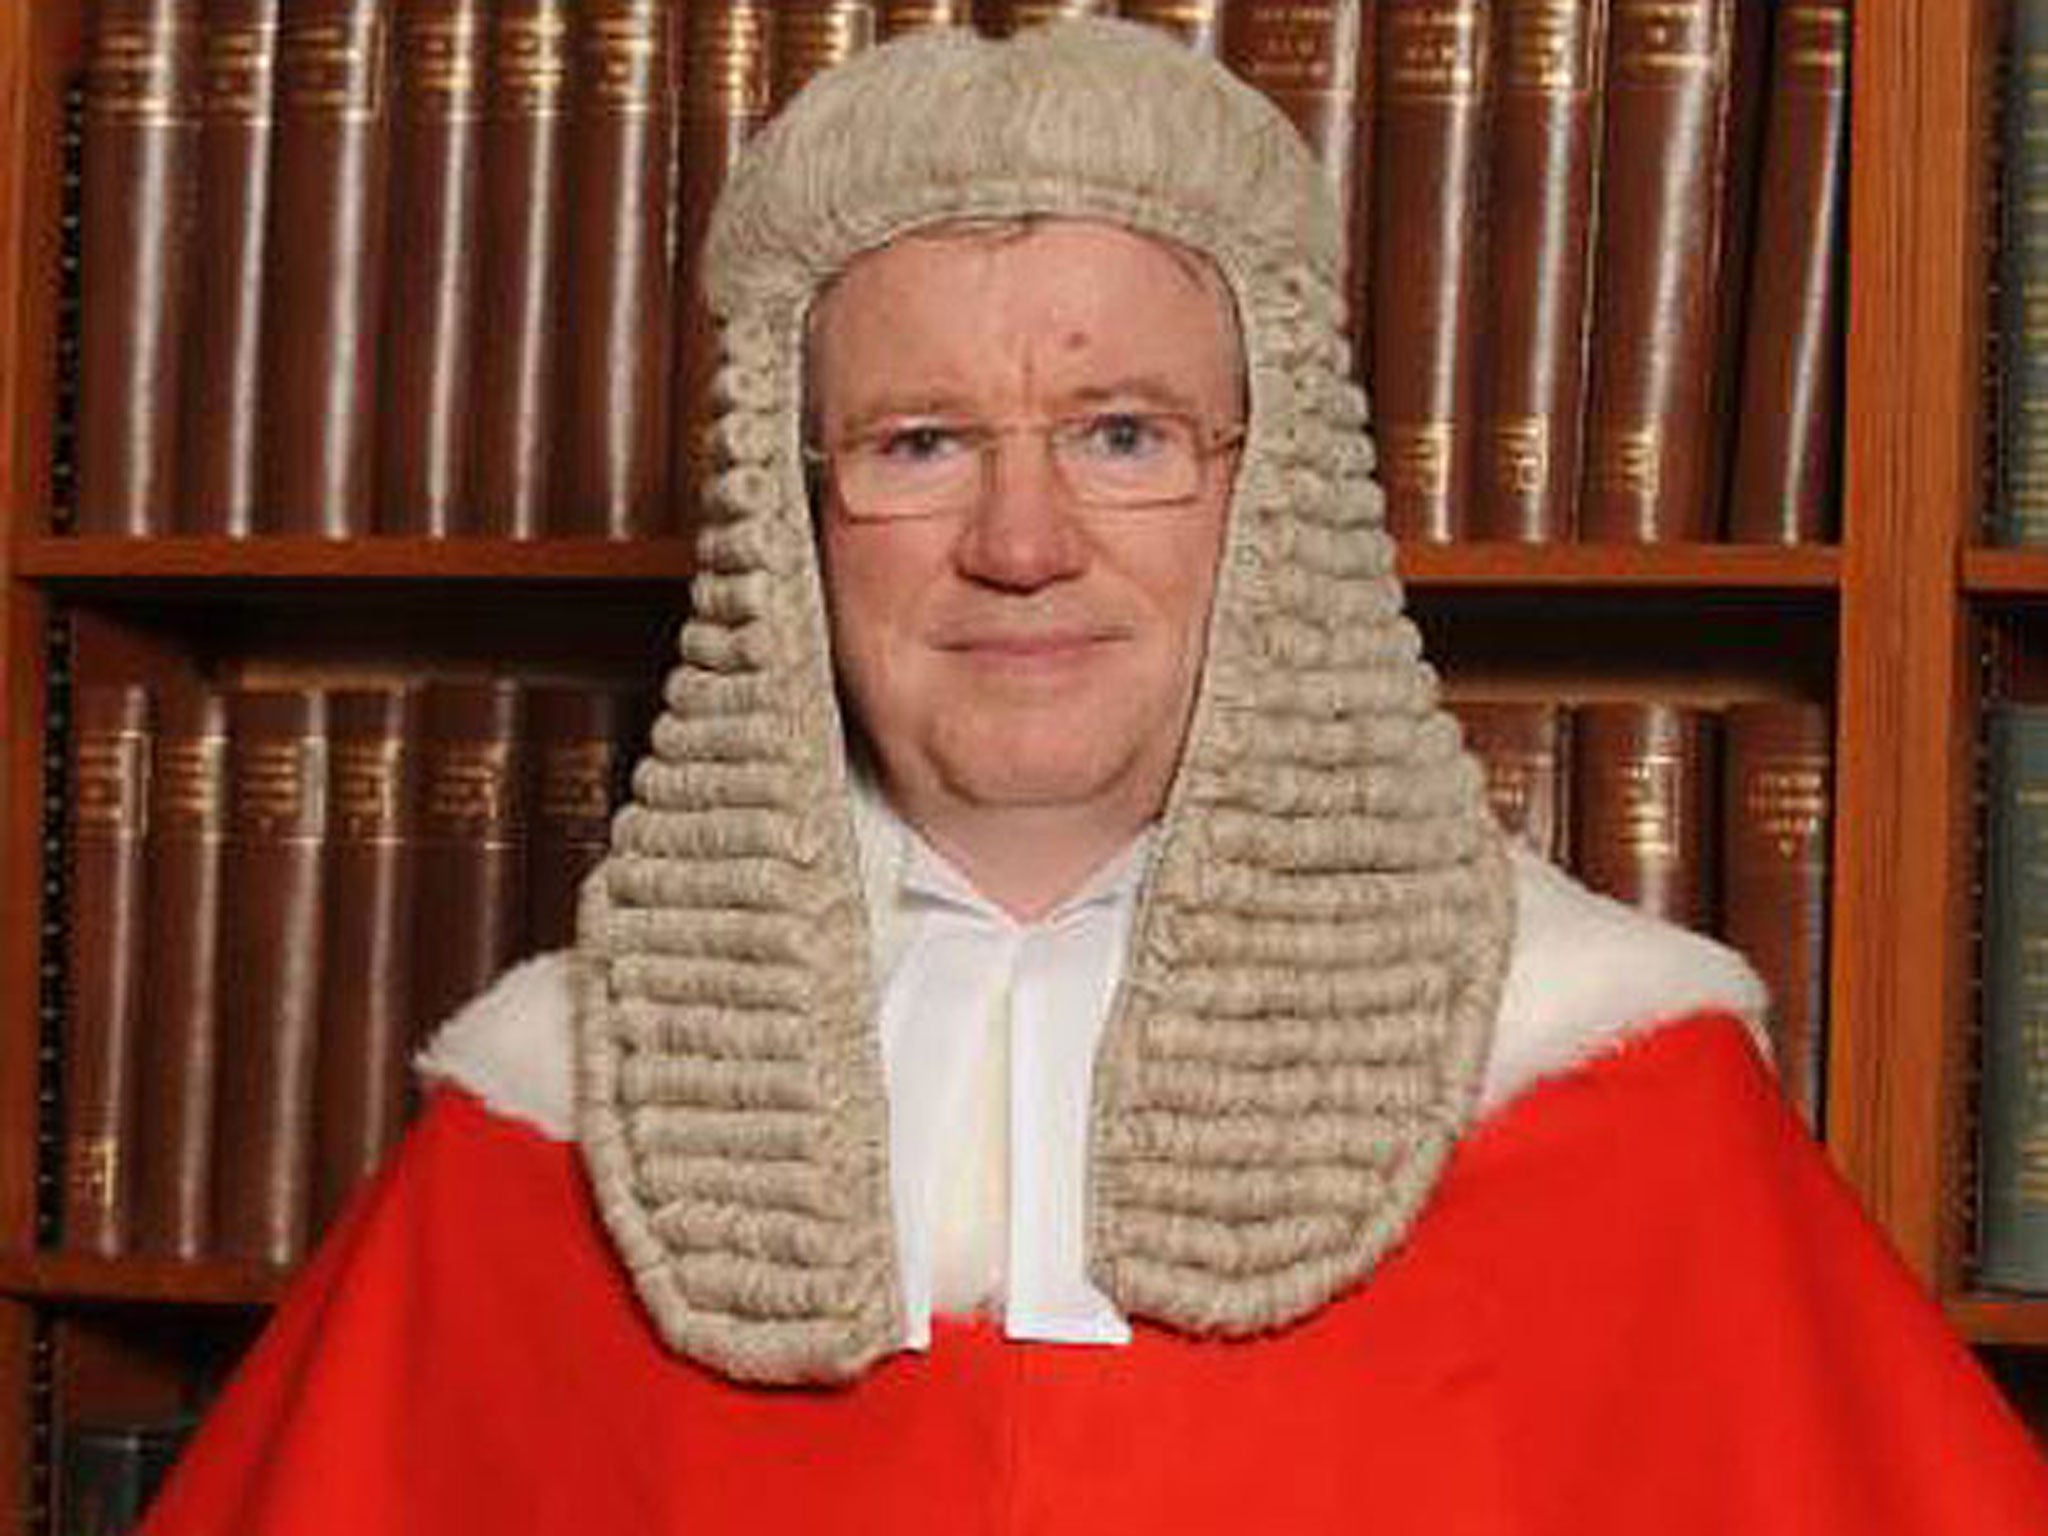 Mr Justice Sweeney